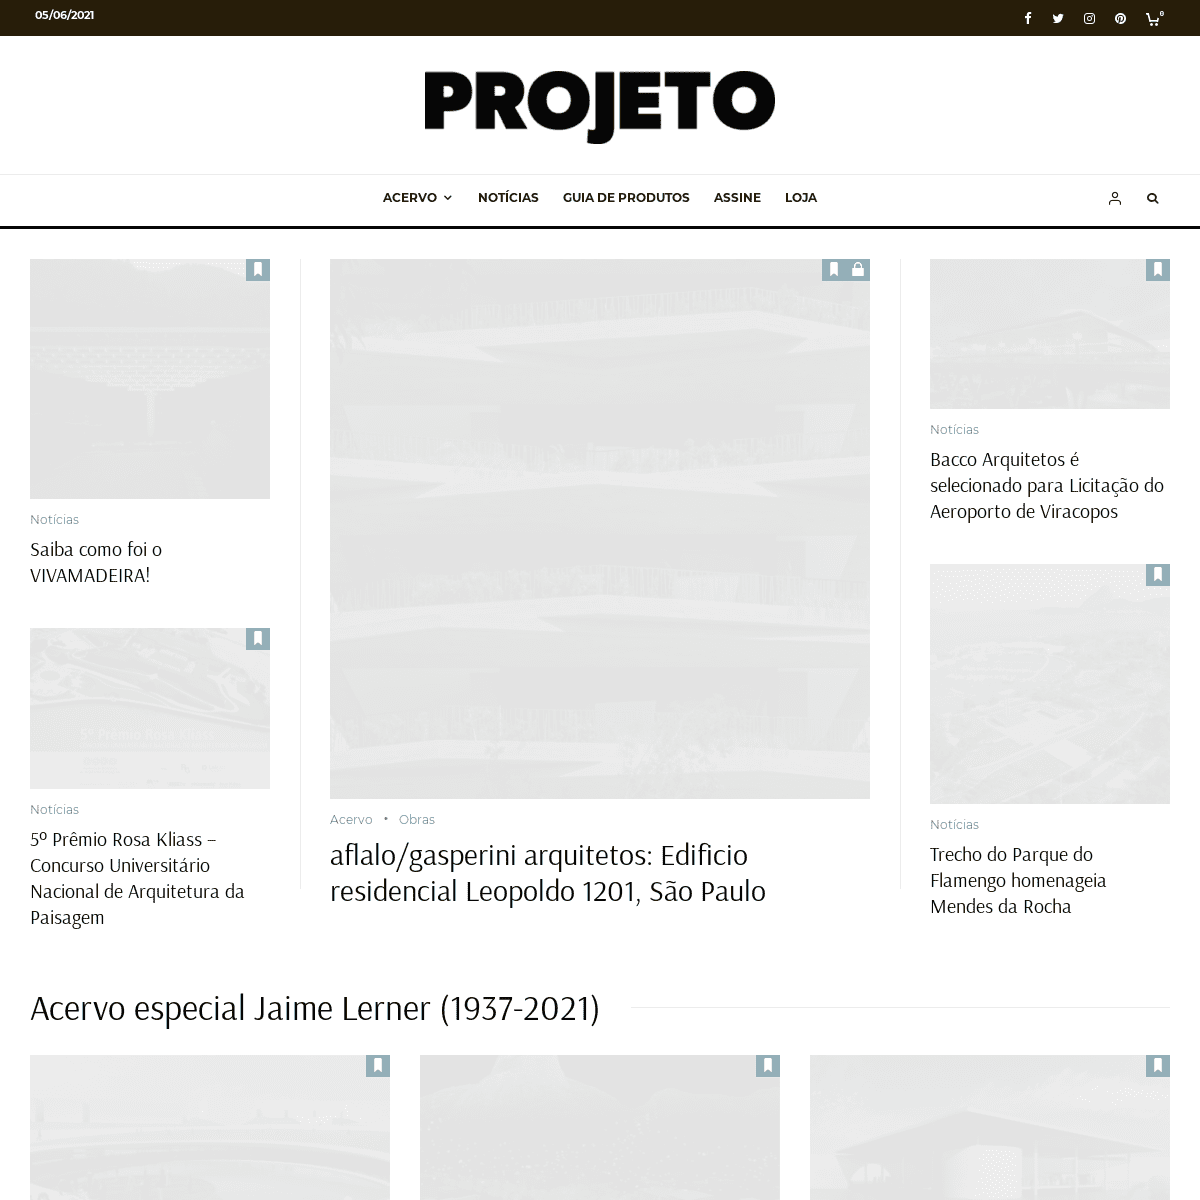 A complete backup of https://revistaprojeto.com.br